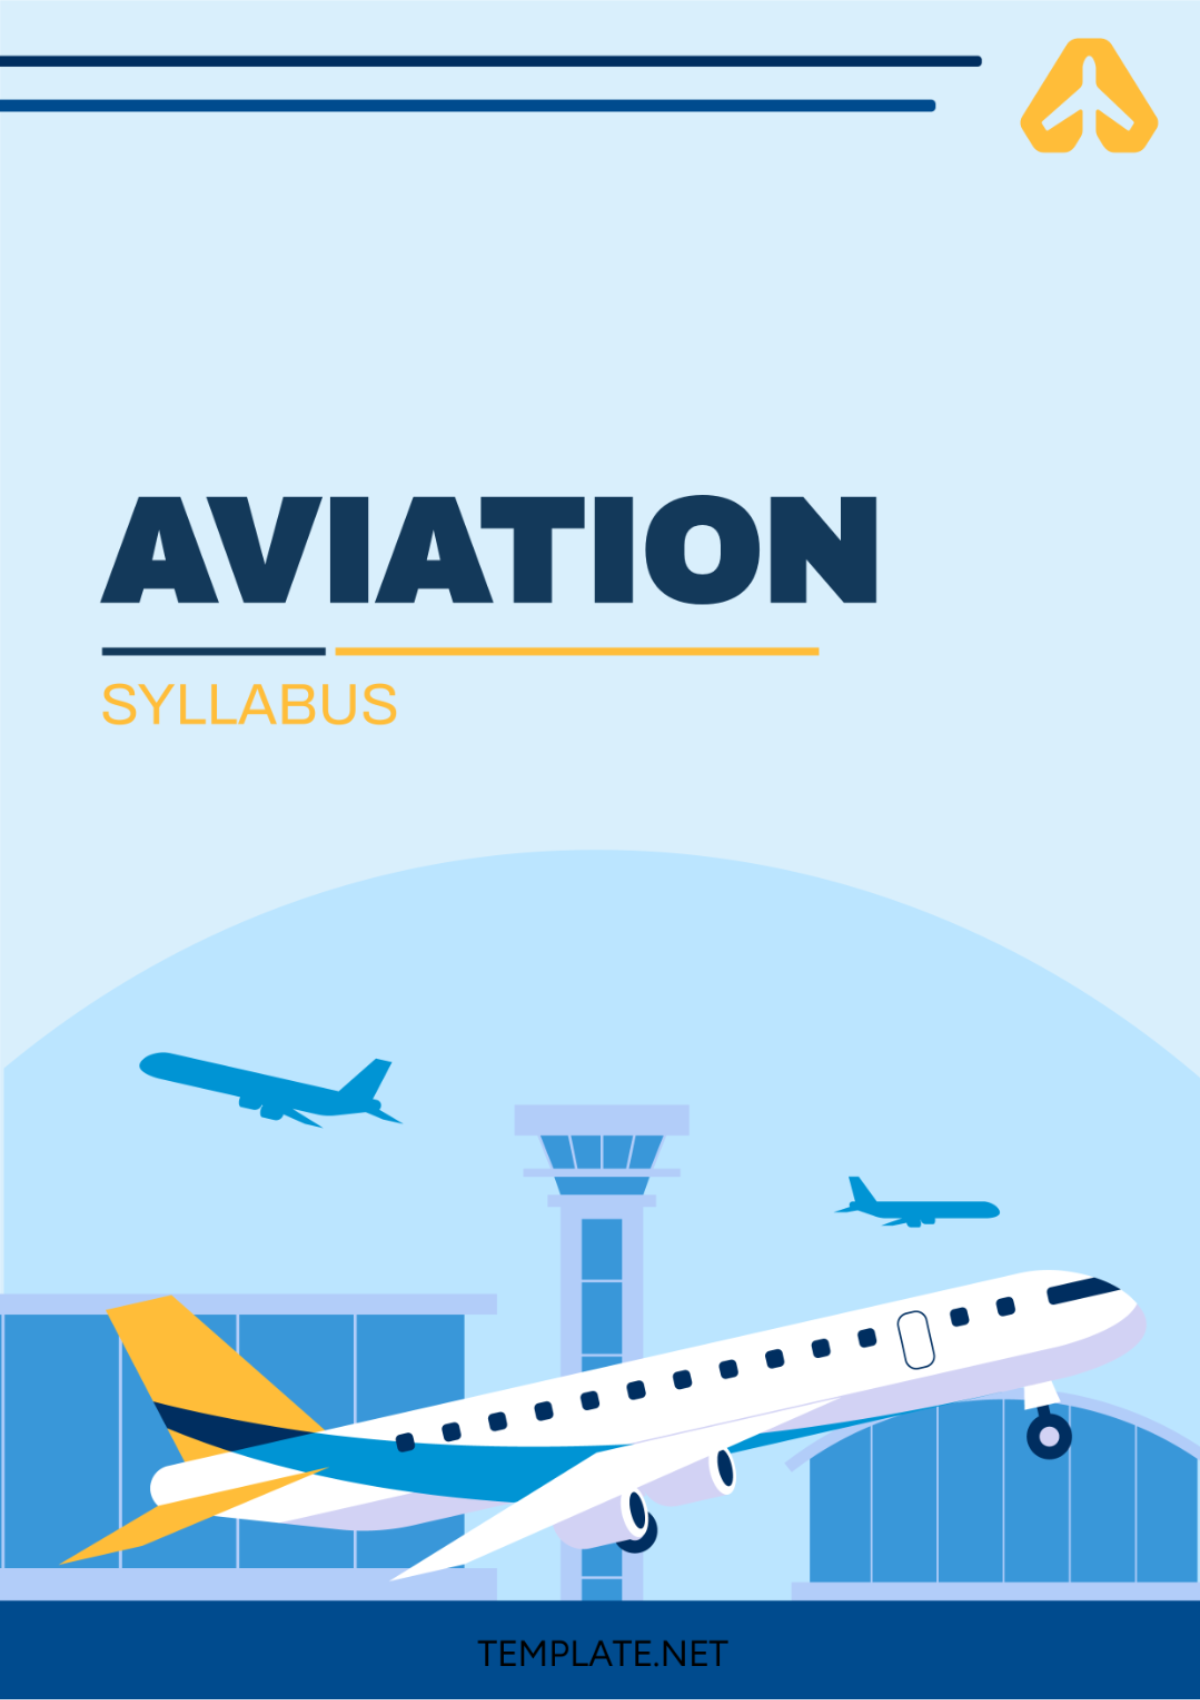 Aviation Syllabus Template